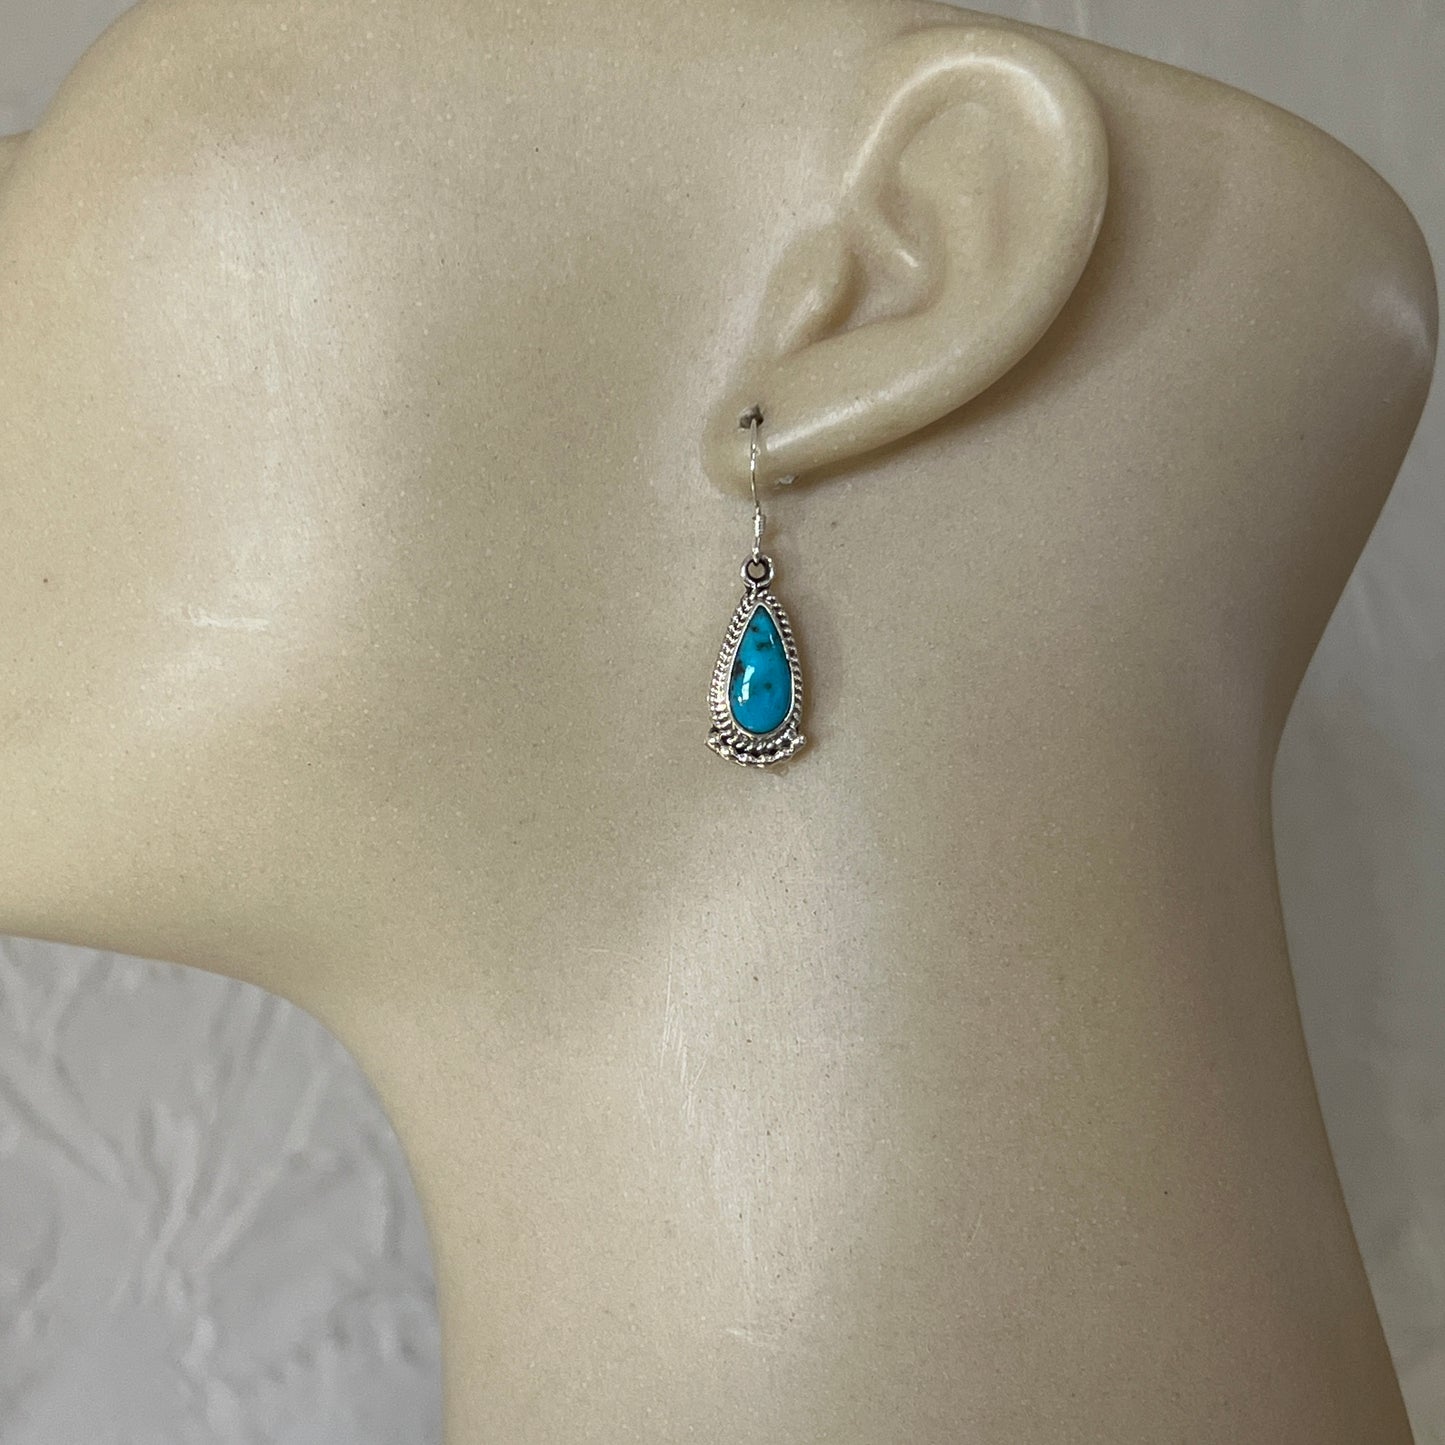 Small Dainty teardrop turquoise dangle earrings #2, sterling silver, Navajo handmade, Sharon McCarthy